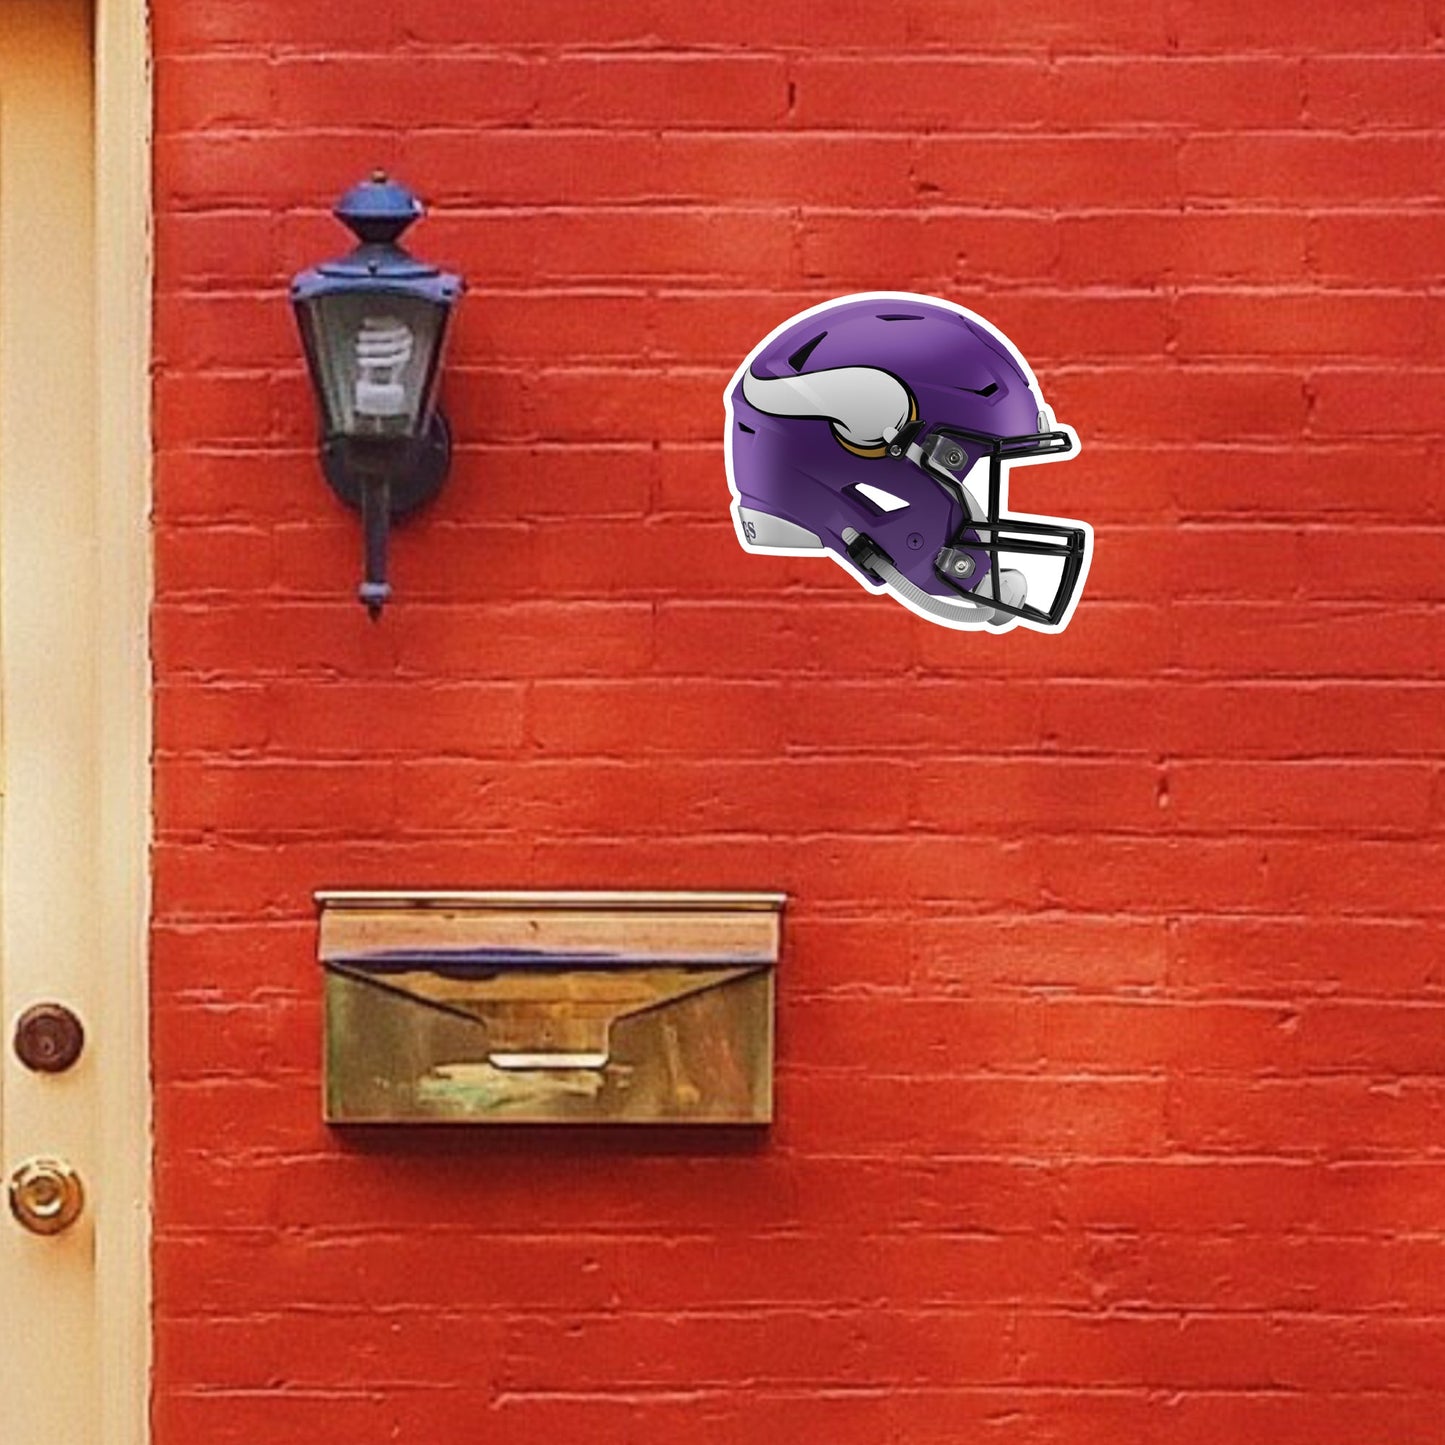 Minnesota Vikings: Outdoor Helmet - Officially Licensed NFL Outdoor Graphic